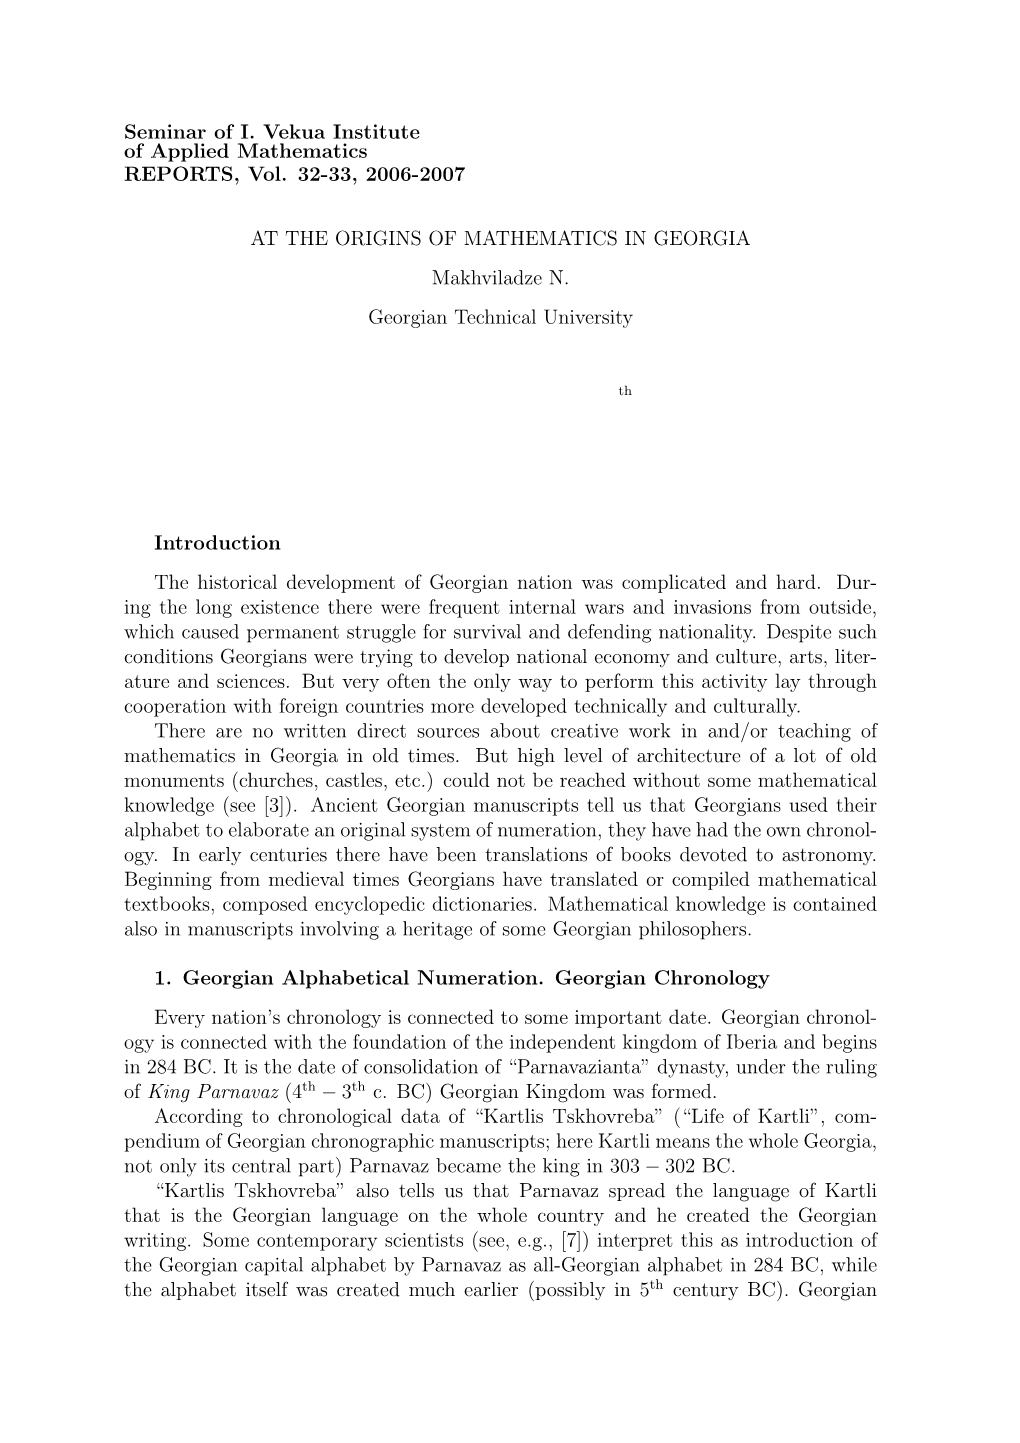 Seminar of I. Vekua Institute of Applied Mathematics REPORTS, Vol. 32-33, 2006-2007